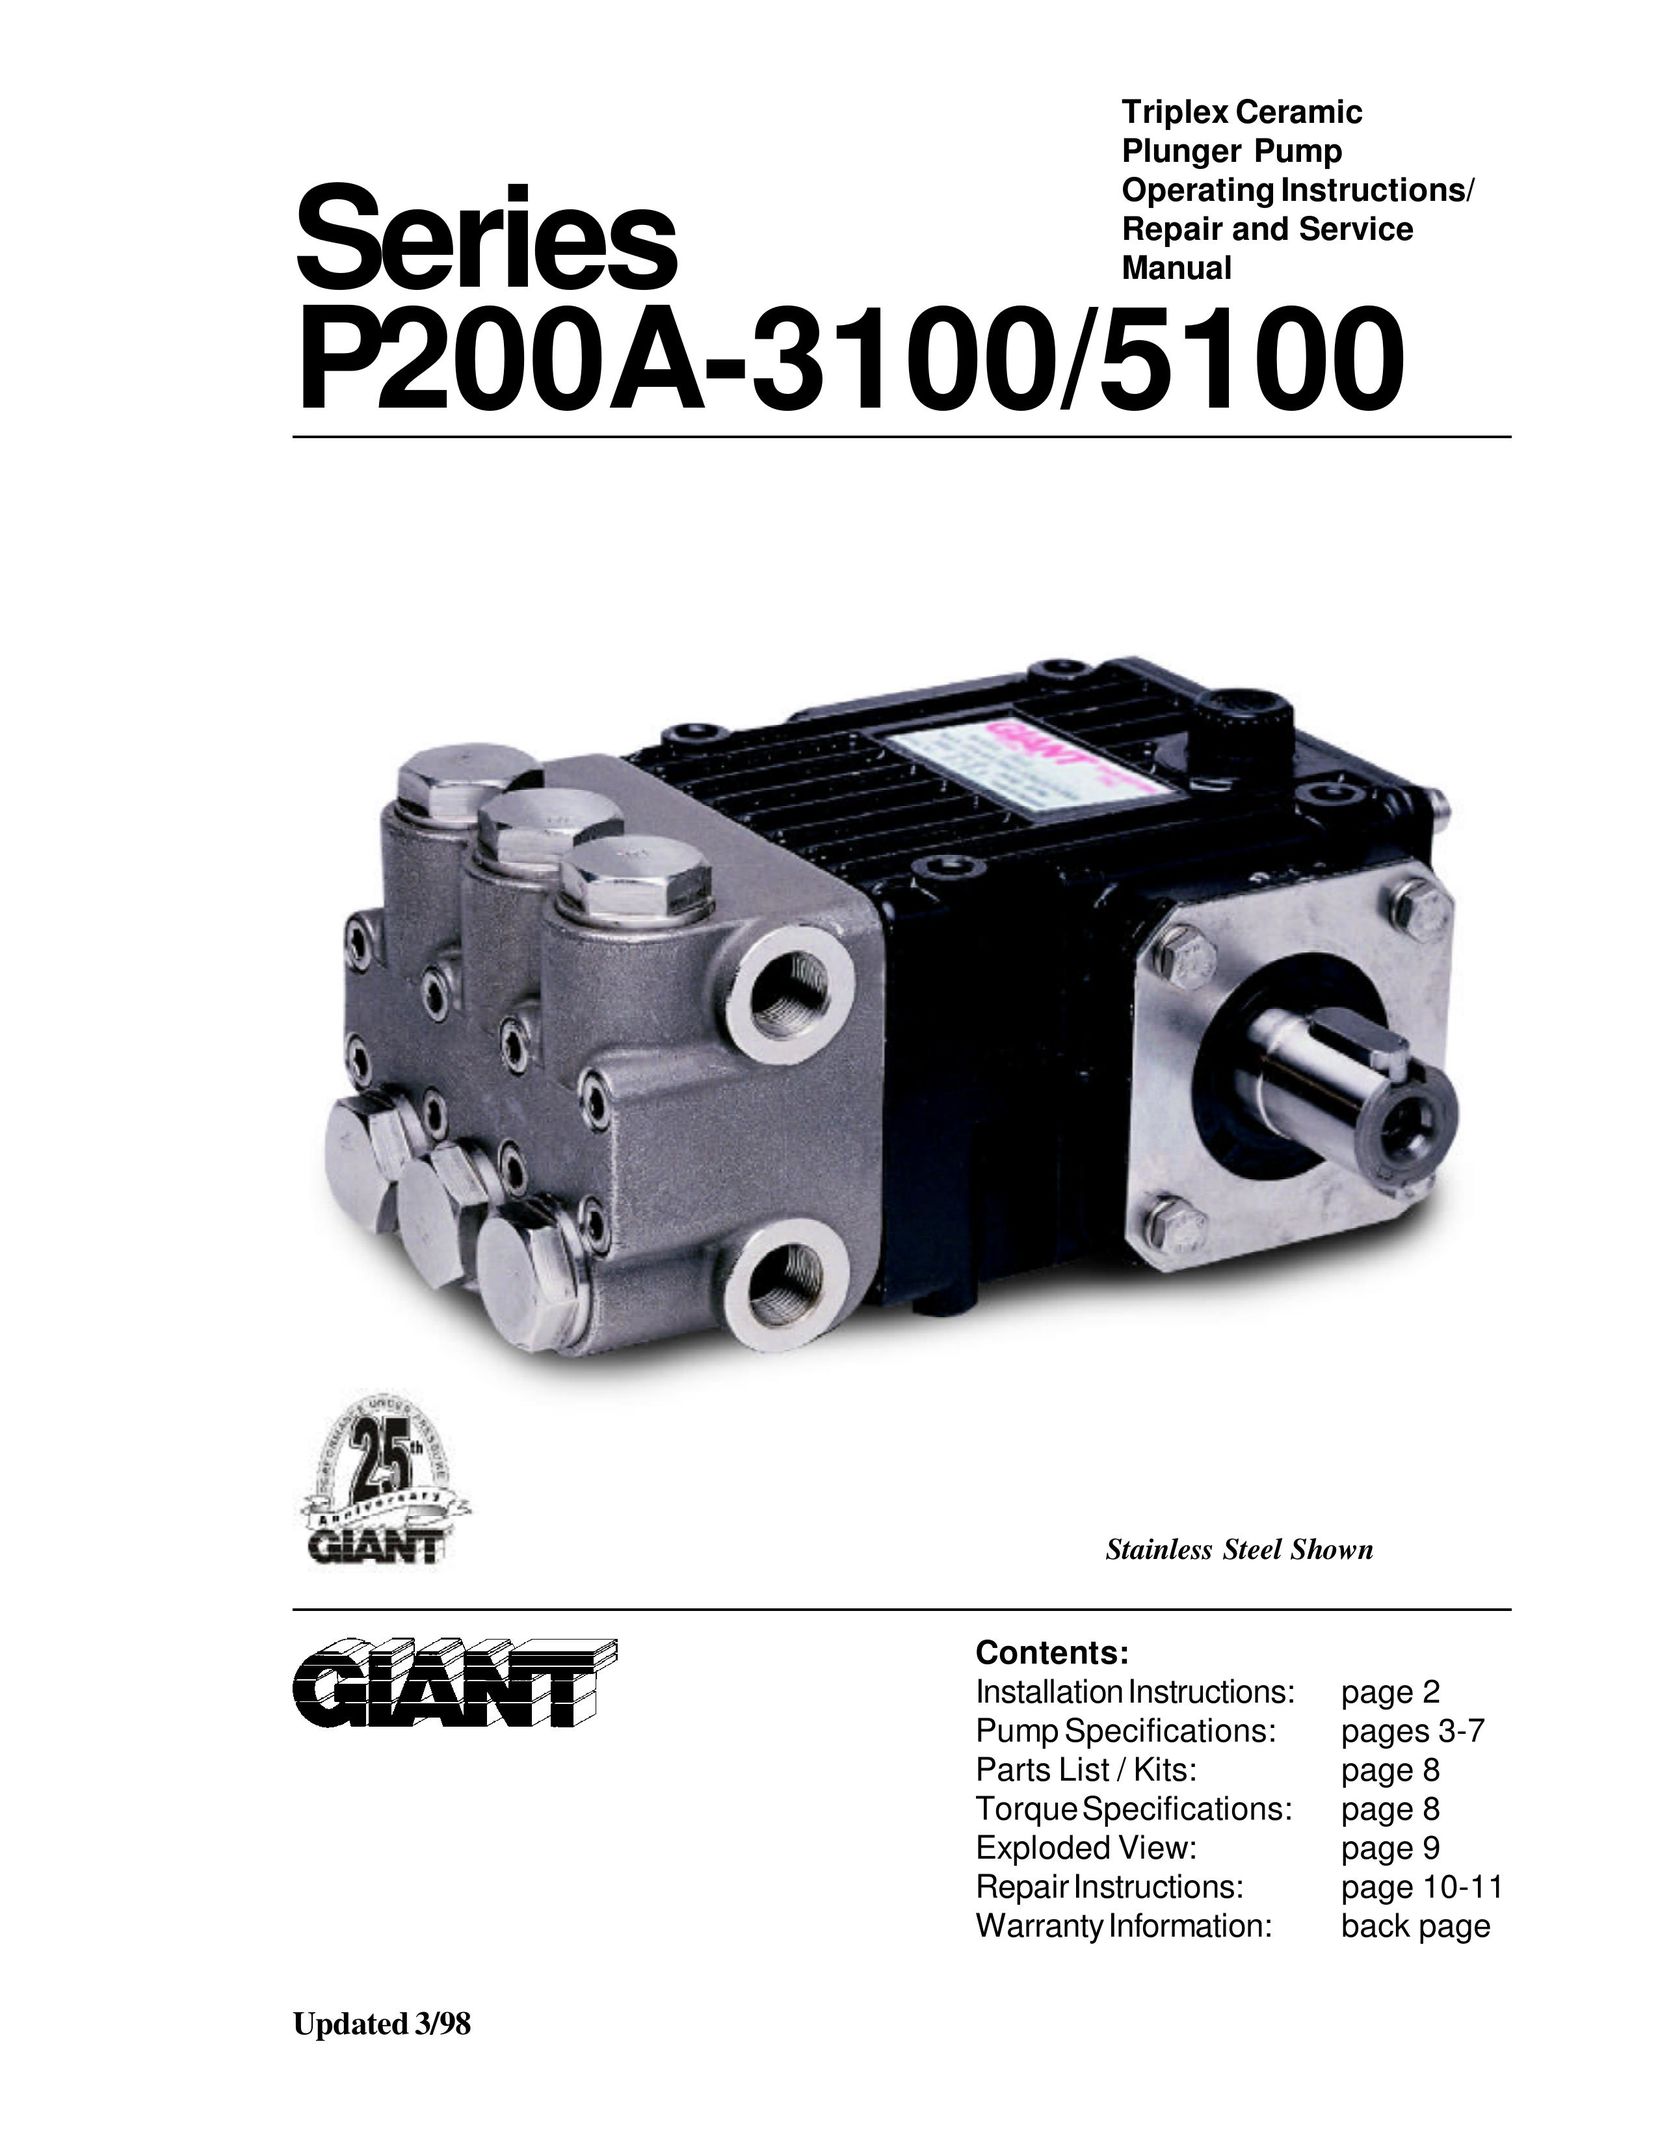 Giant P200A-3100/5100 Plumbing Product User Manual